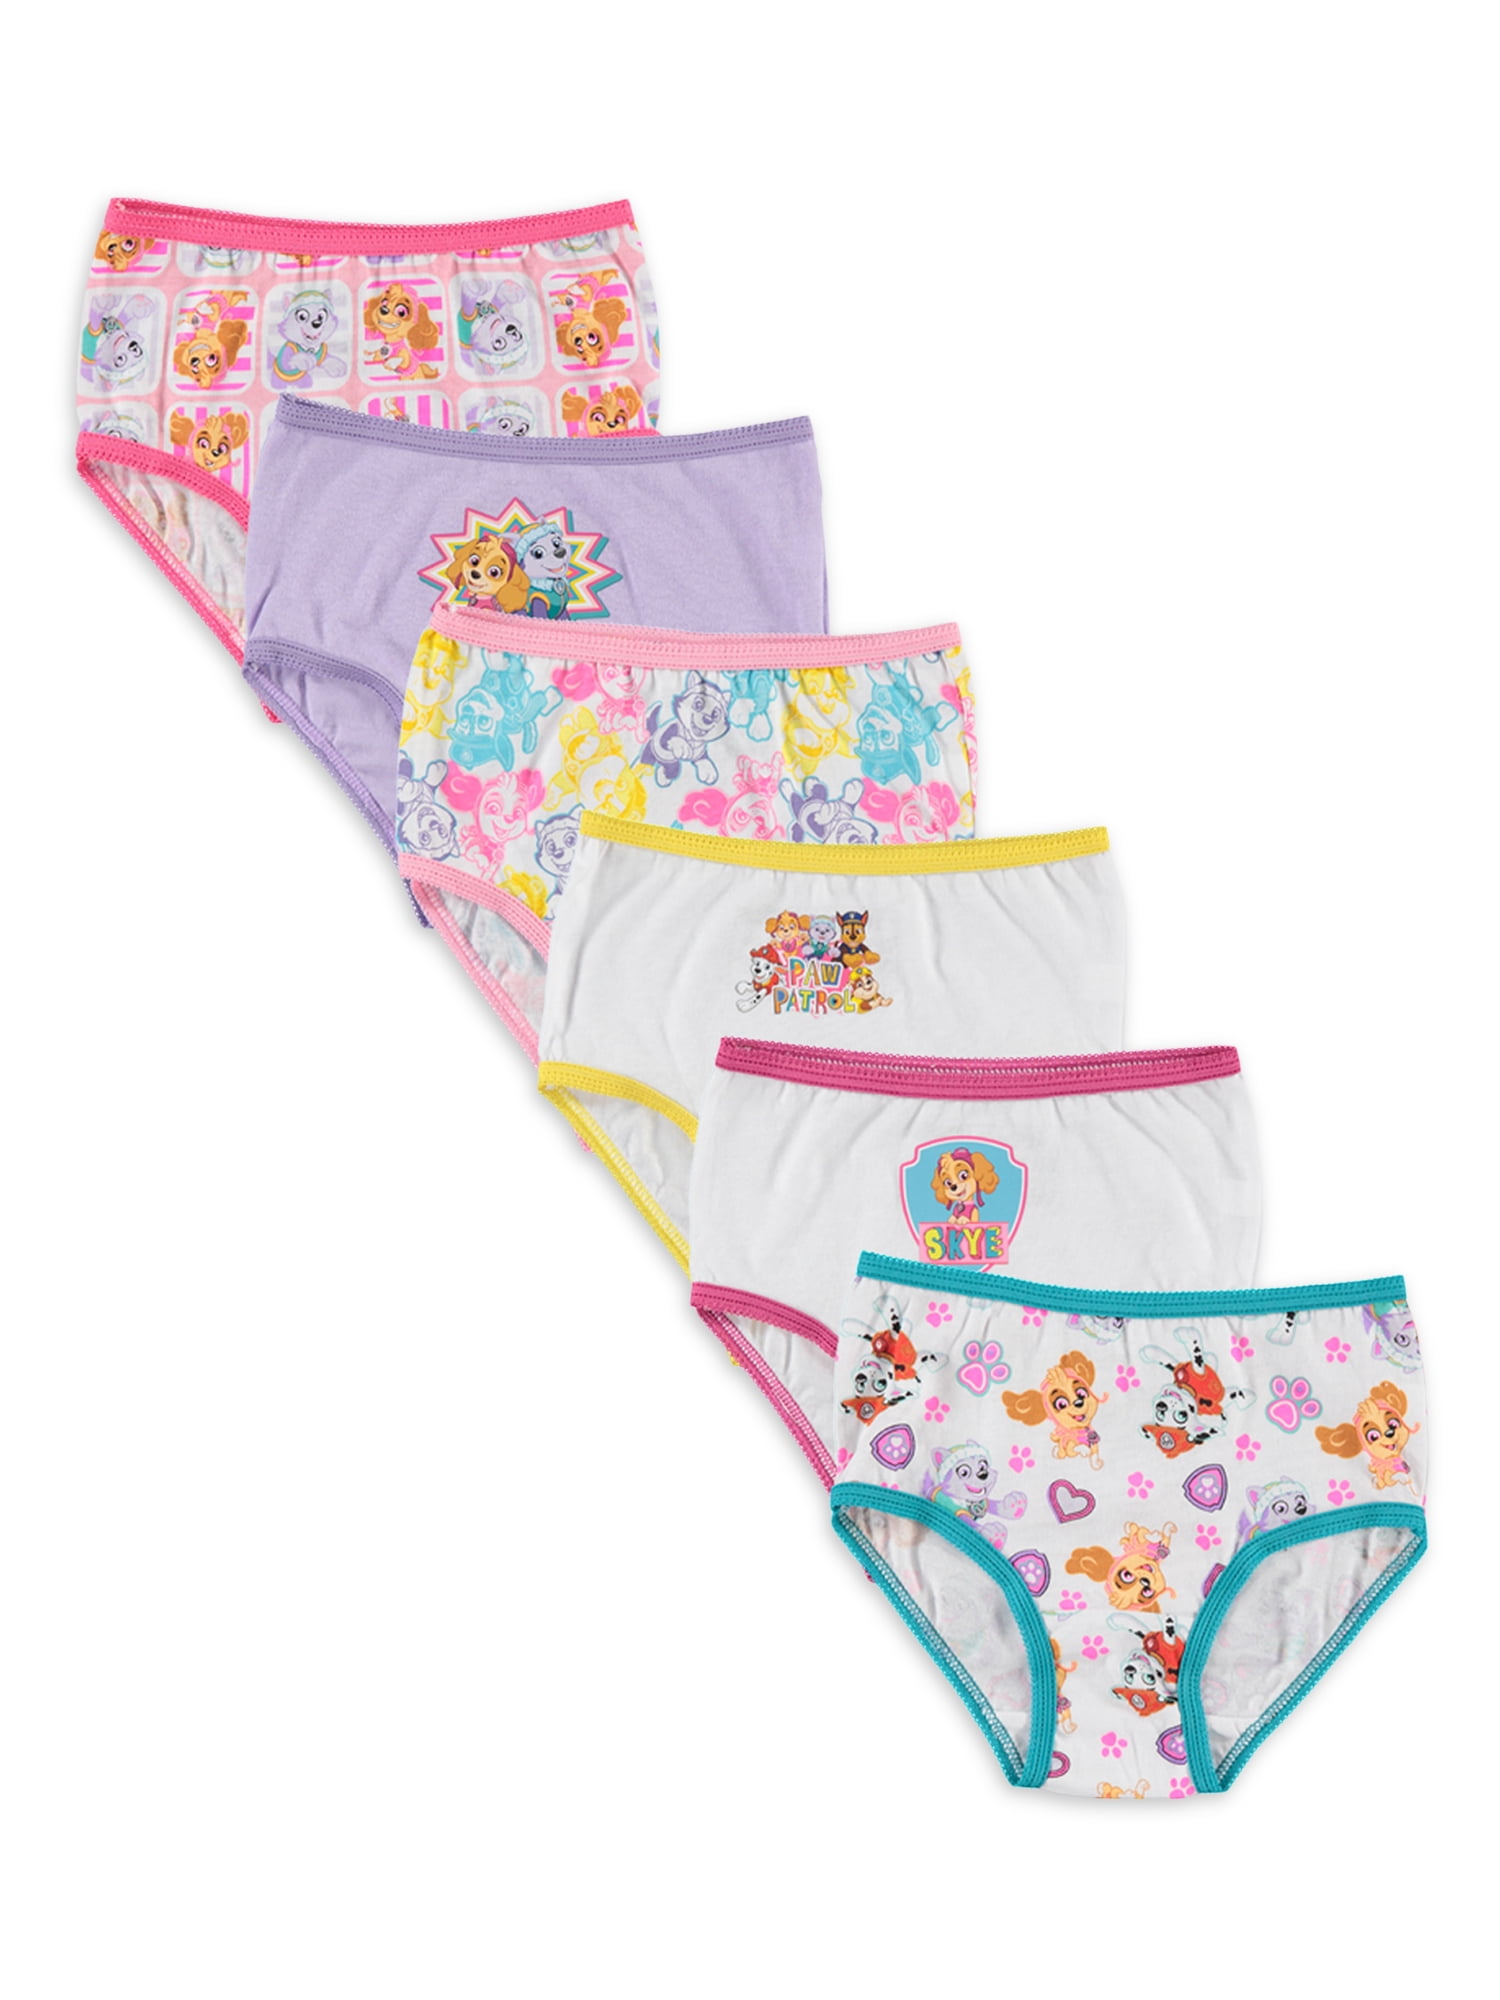 Paw Patrol Toddler Girls Underwear, 6 Pack Sizes 2T-4T